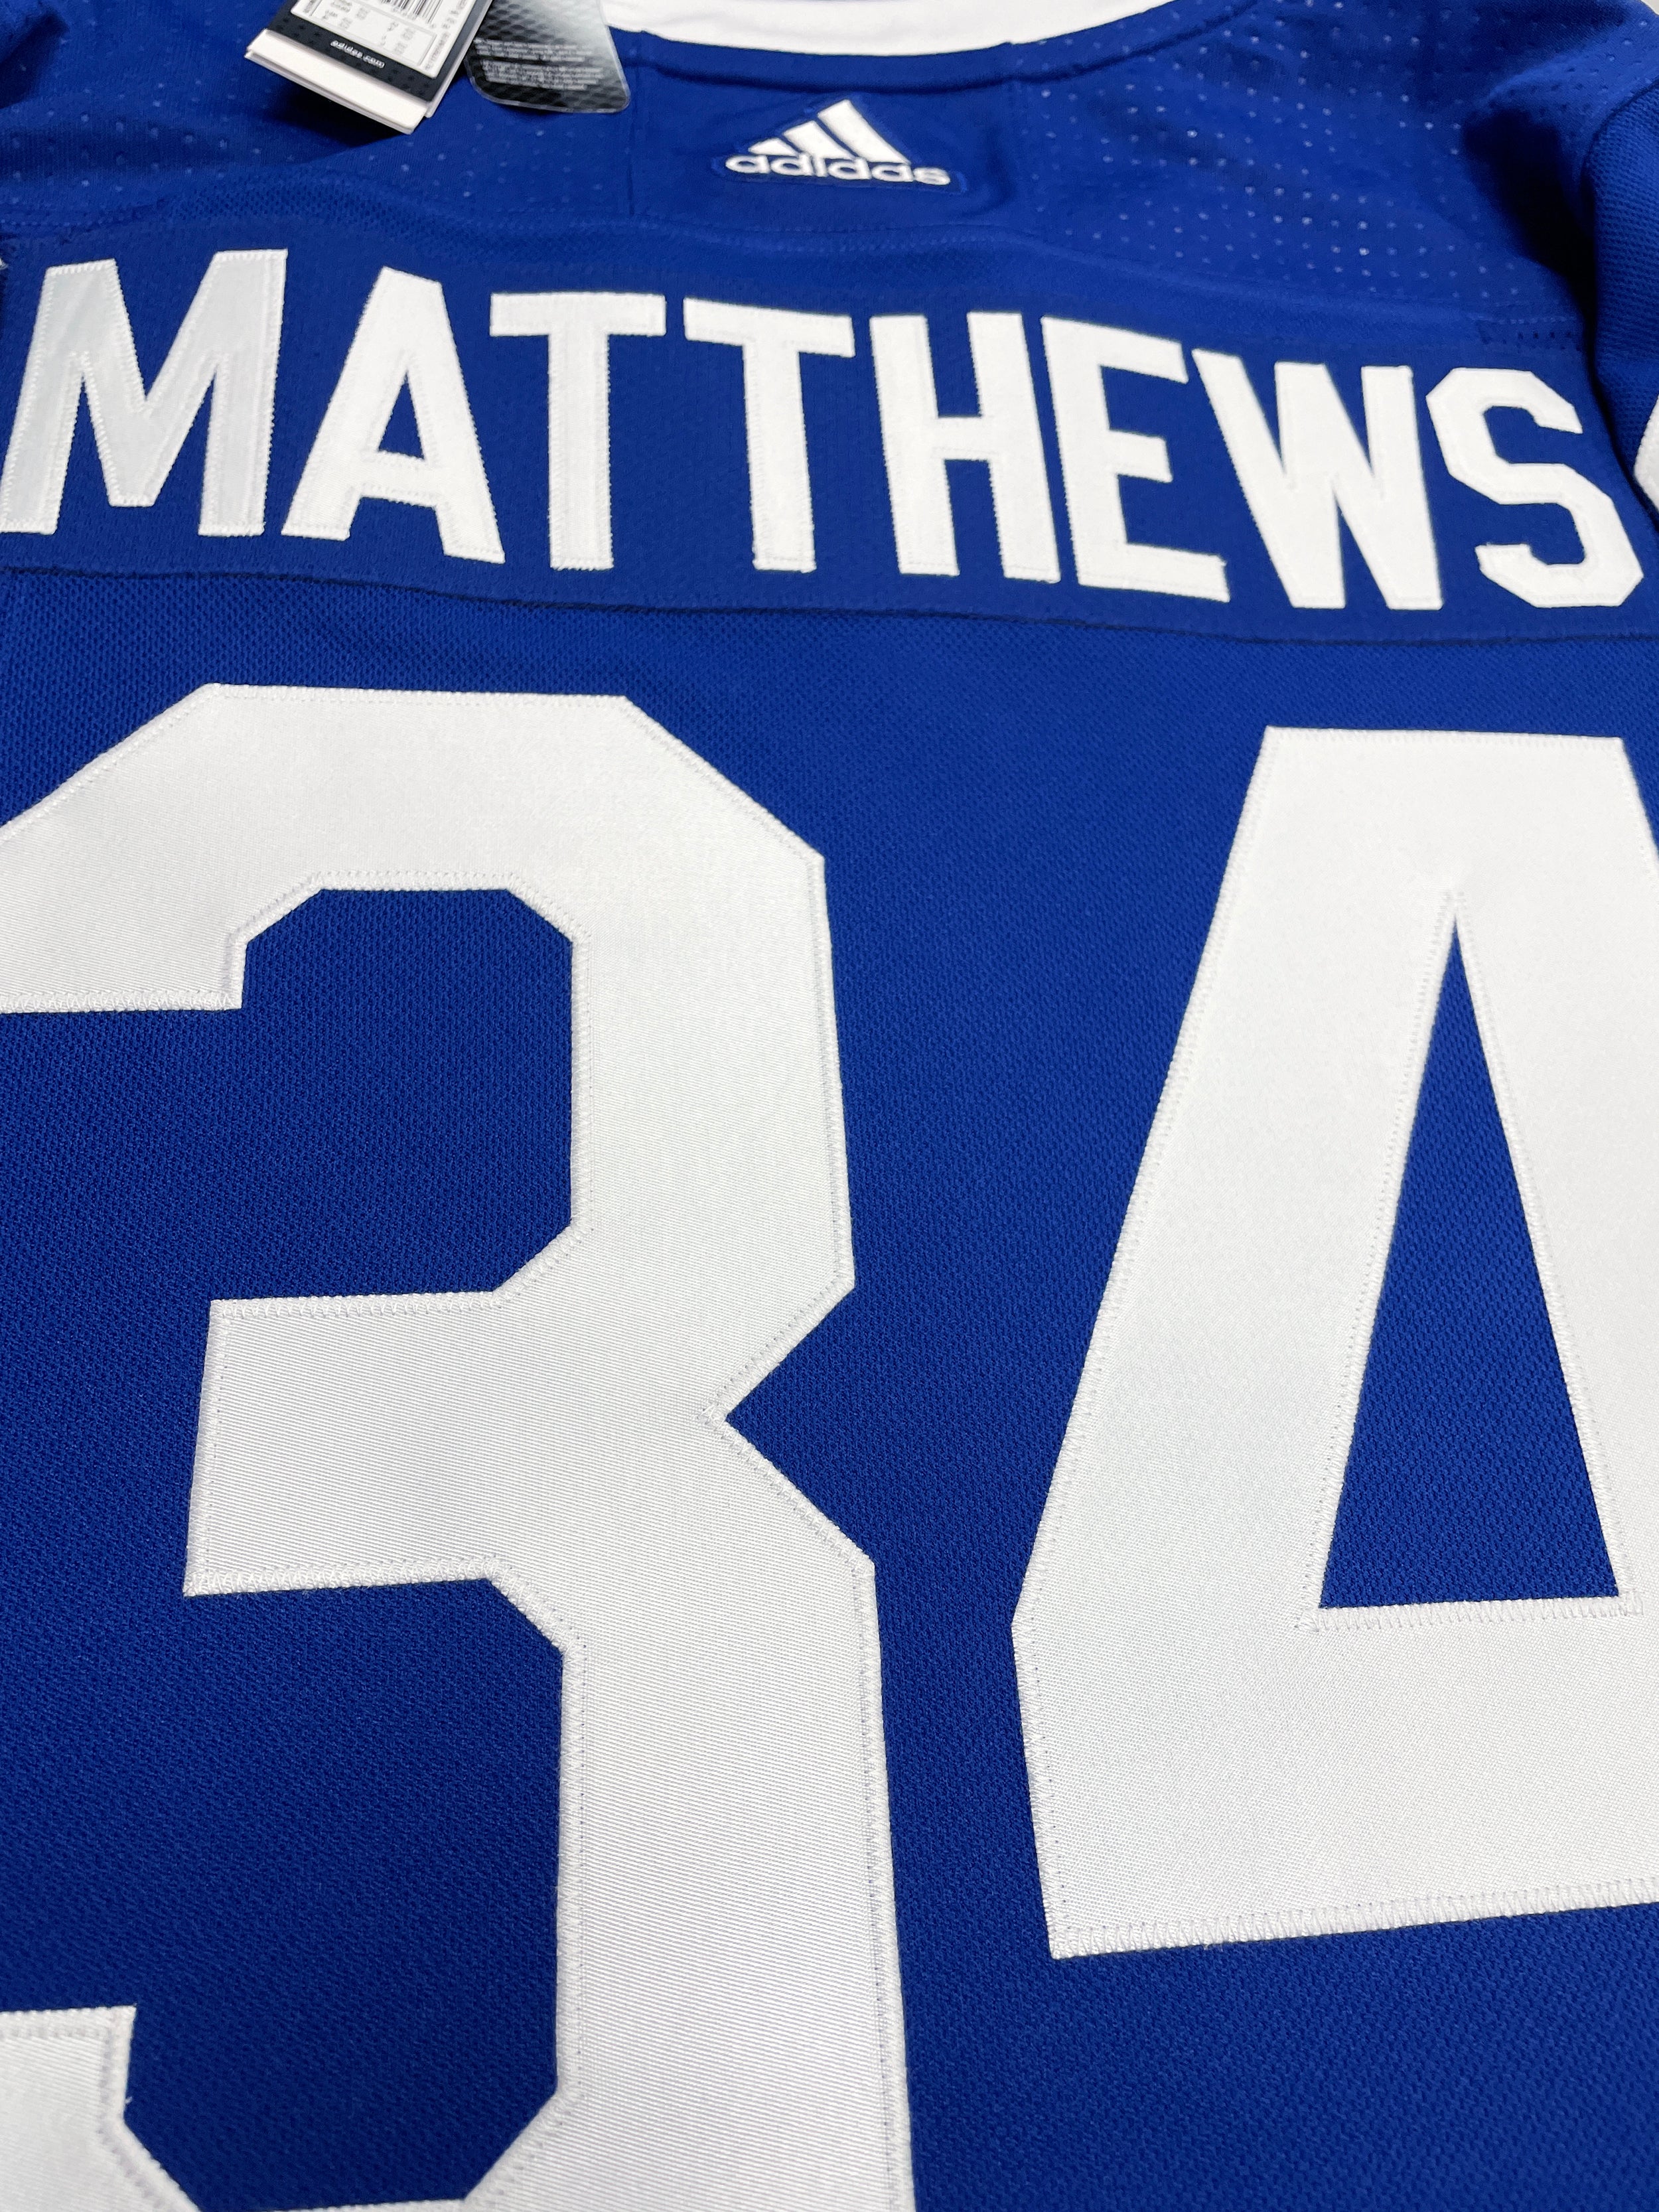 New Adidas Toronto Maple Leafs Authentic Auston Matthews Large 52